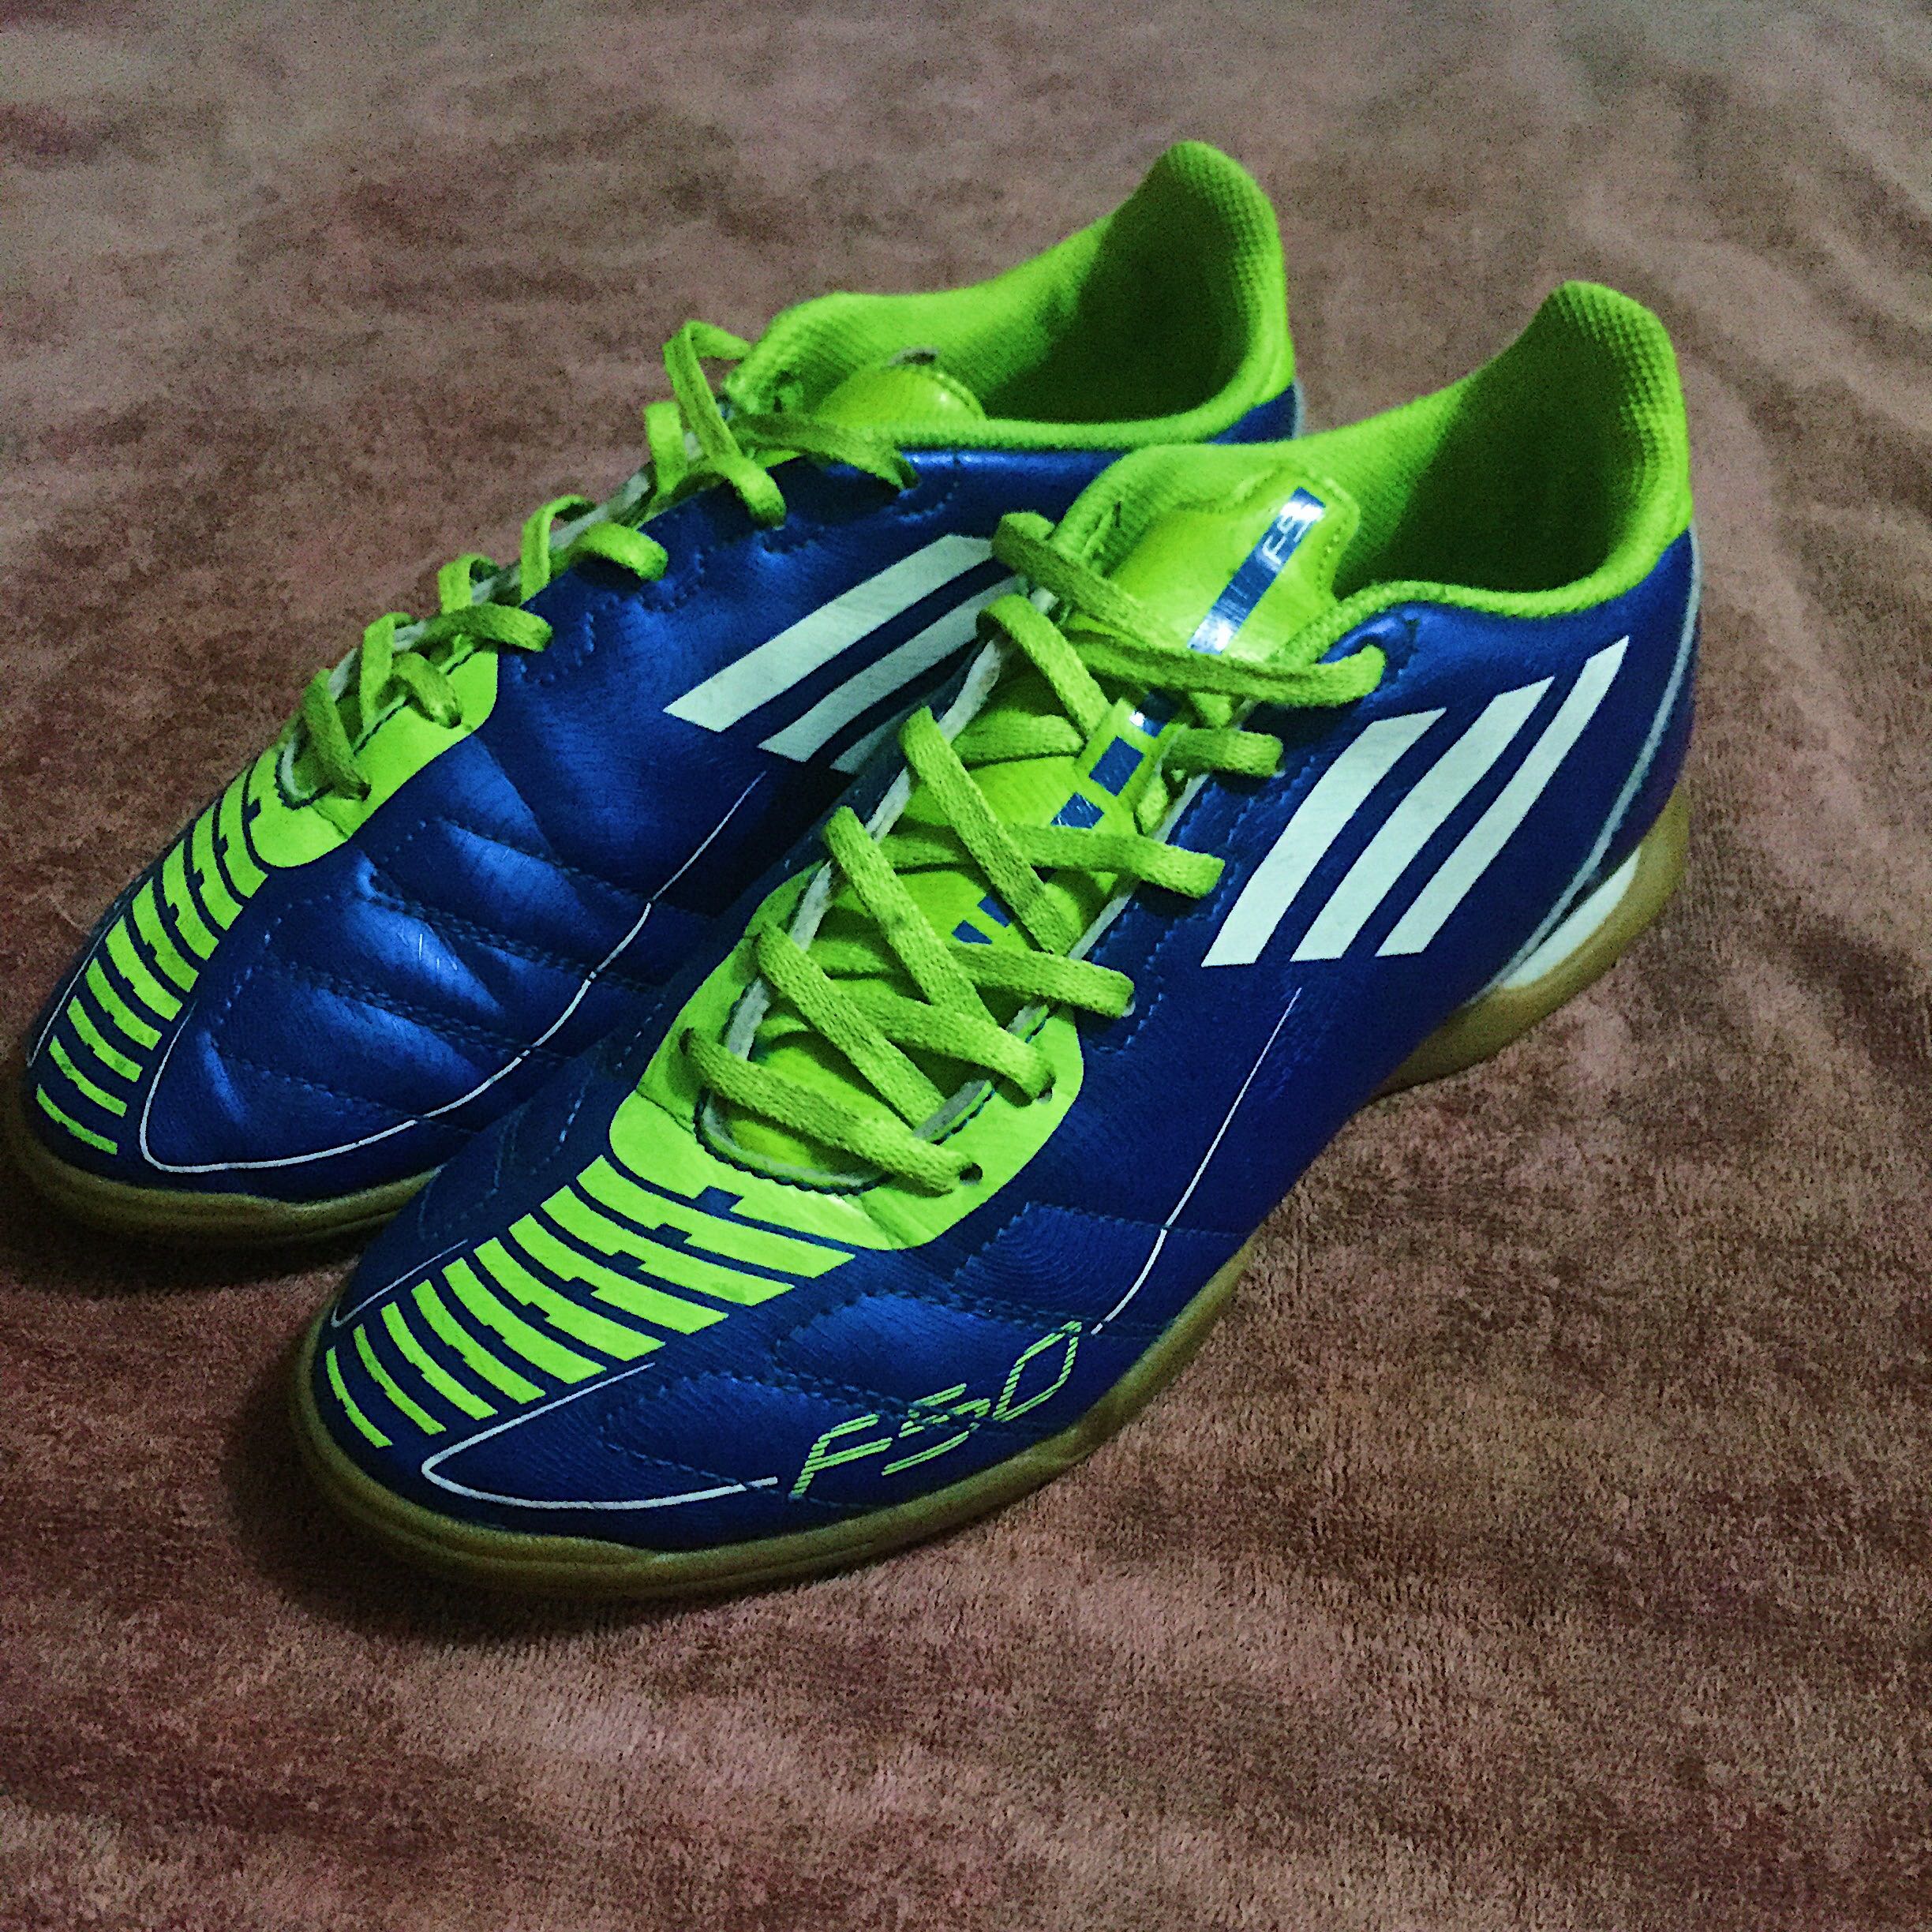 Adidas F50 Blue Futsal Football Soccer Shoes Size 5.5us on Carousell